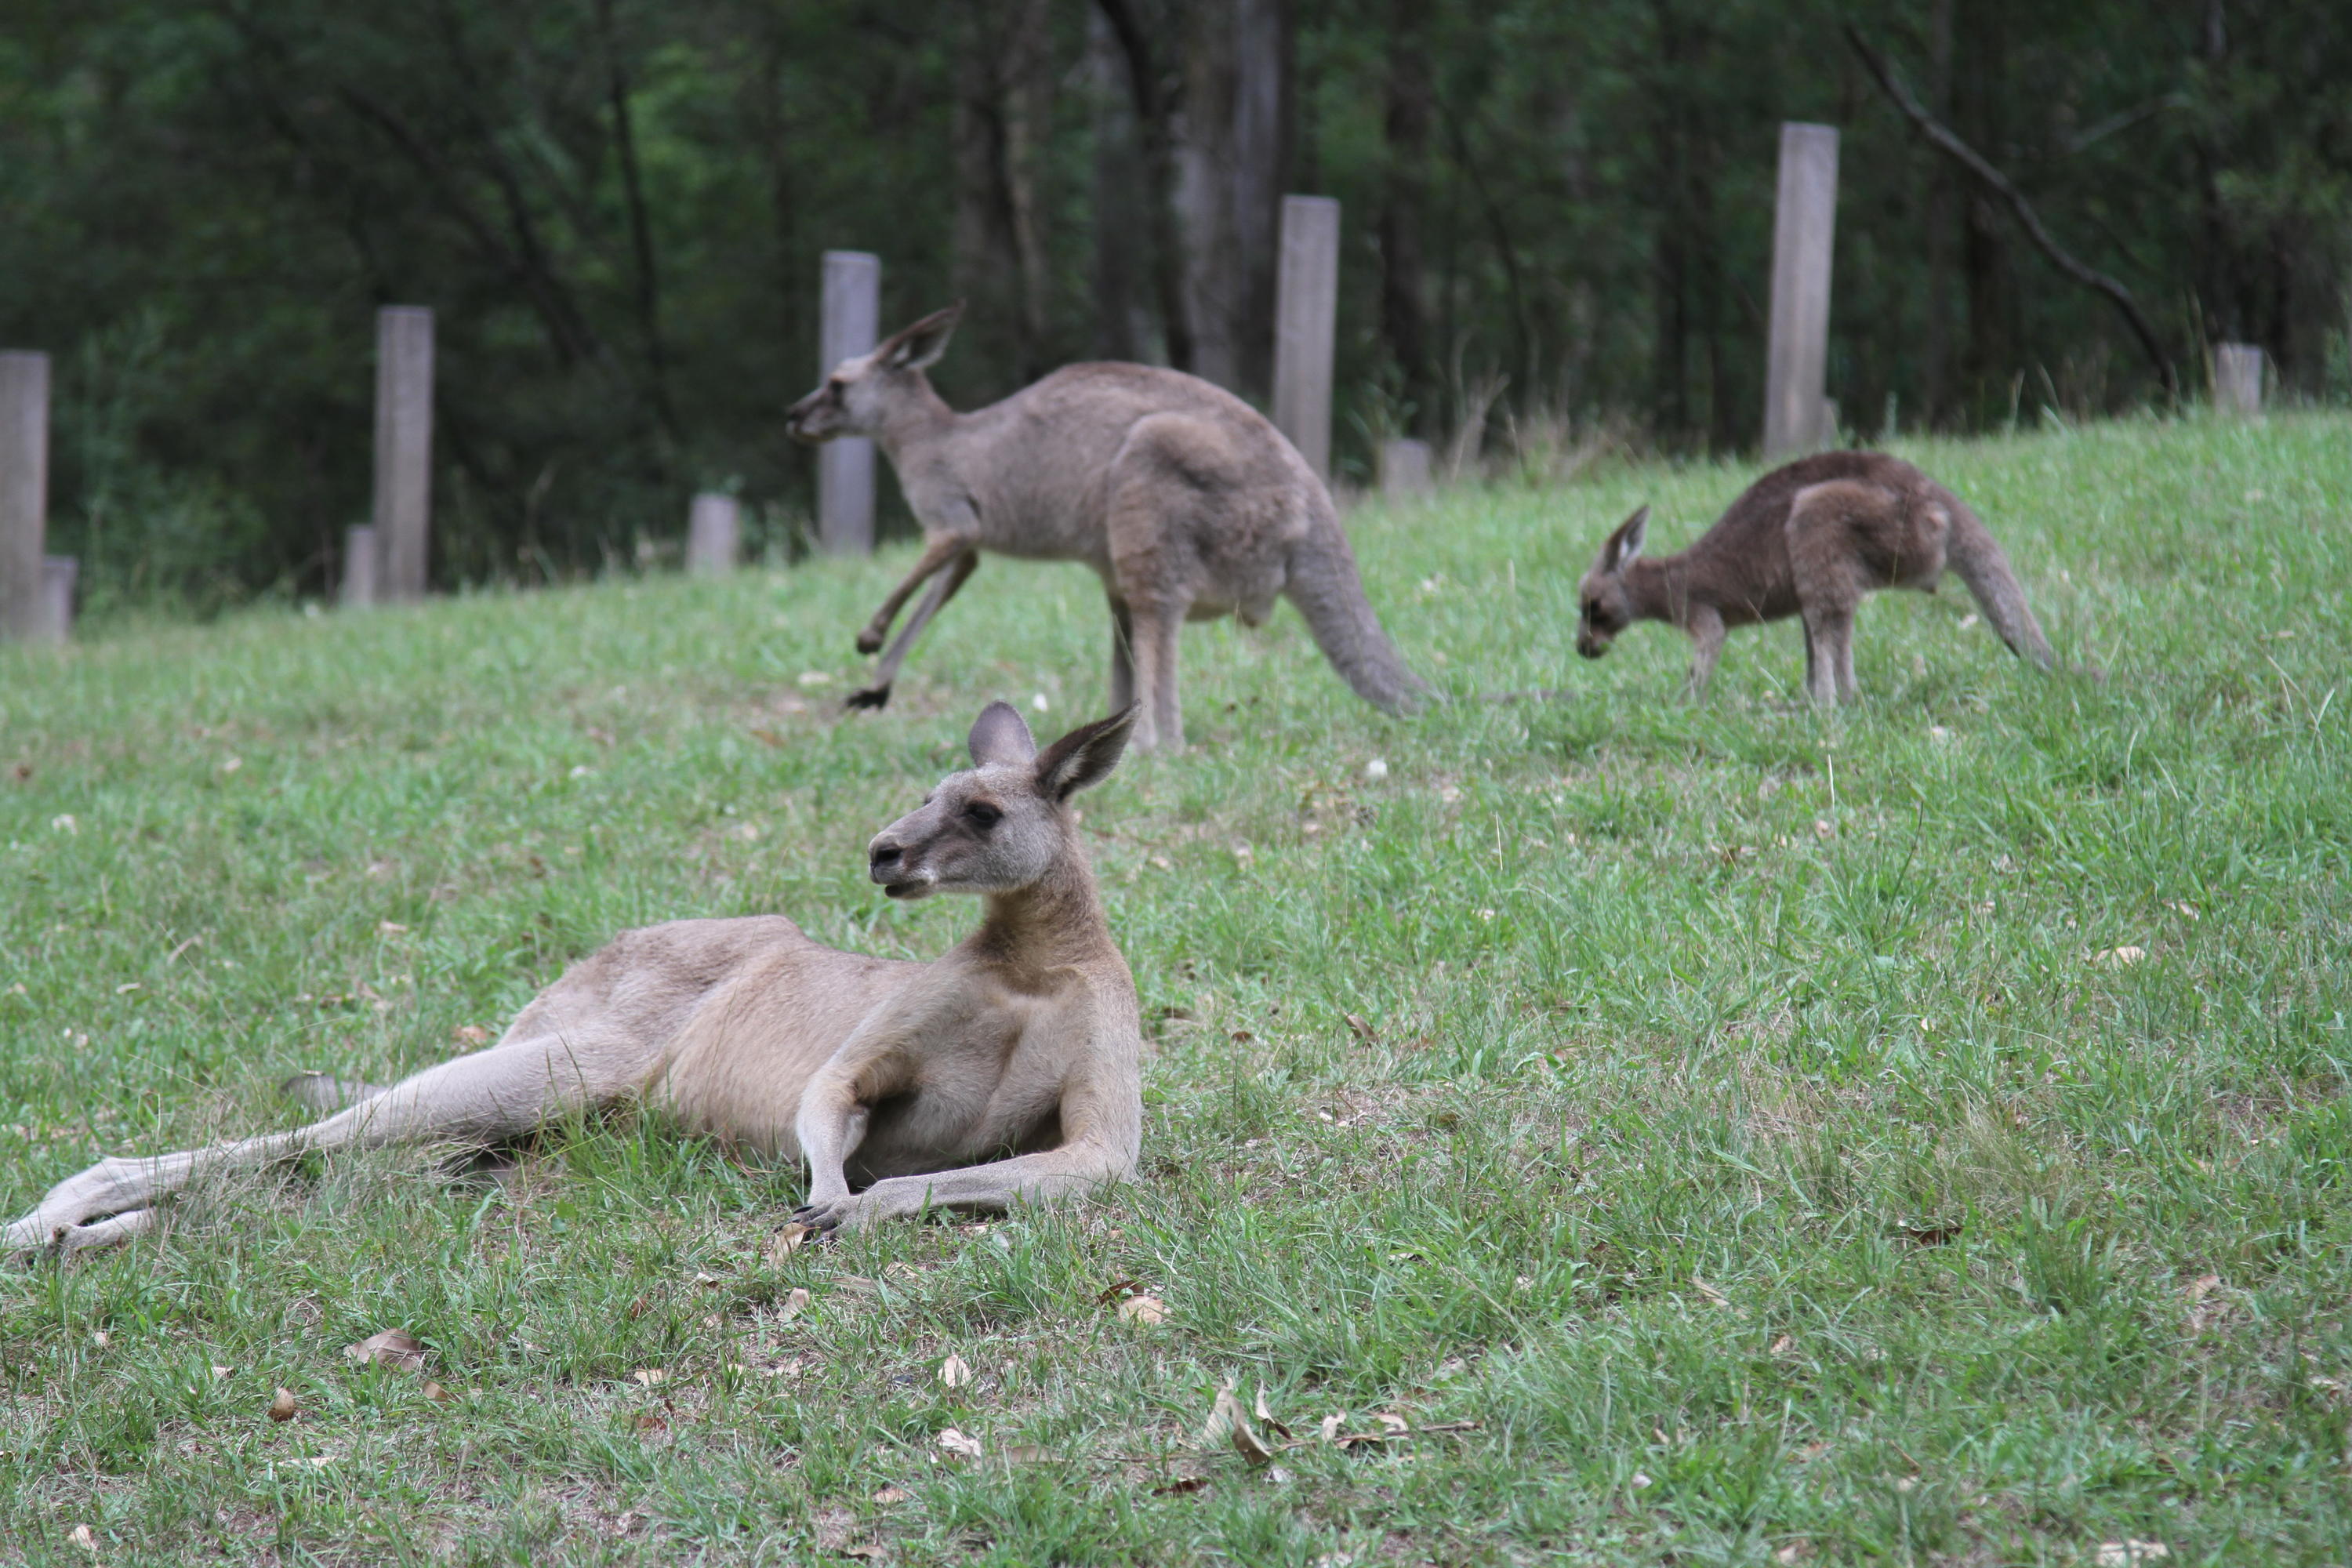 Kangaroos lounging on the grass.